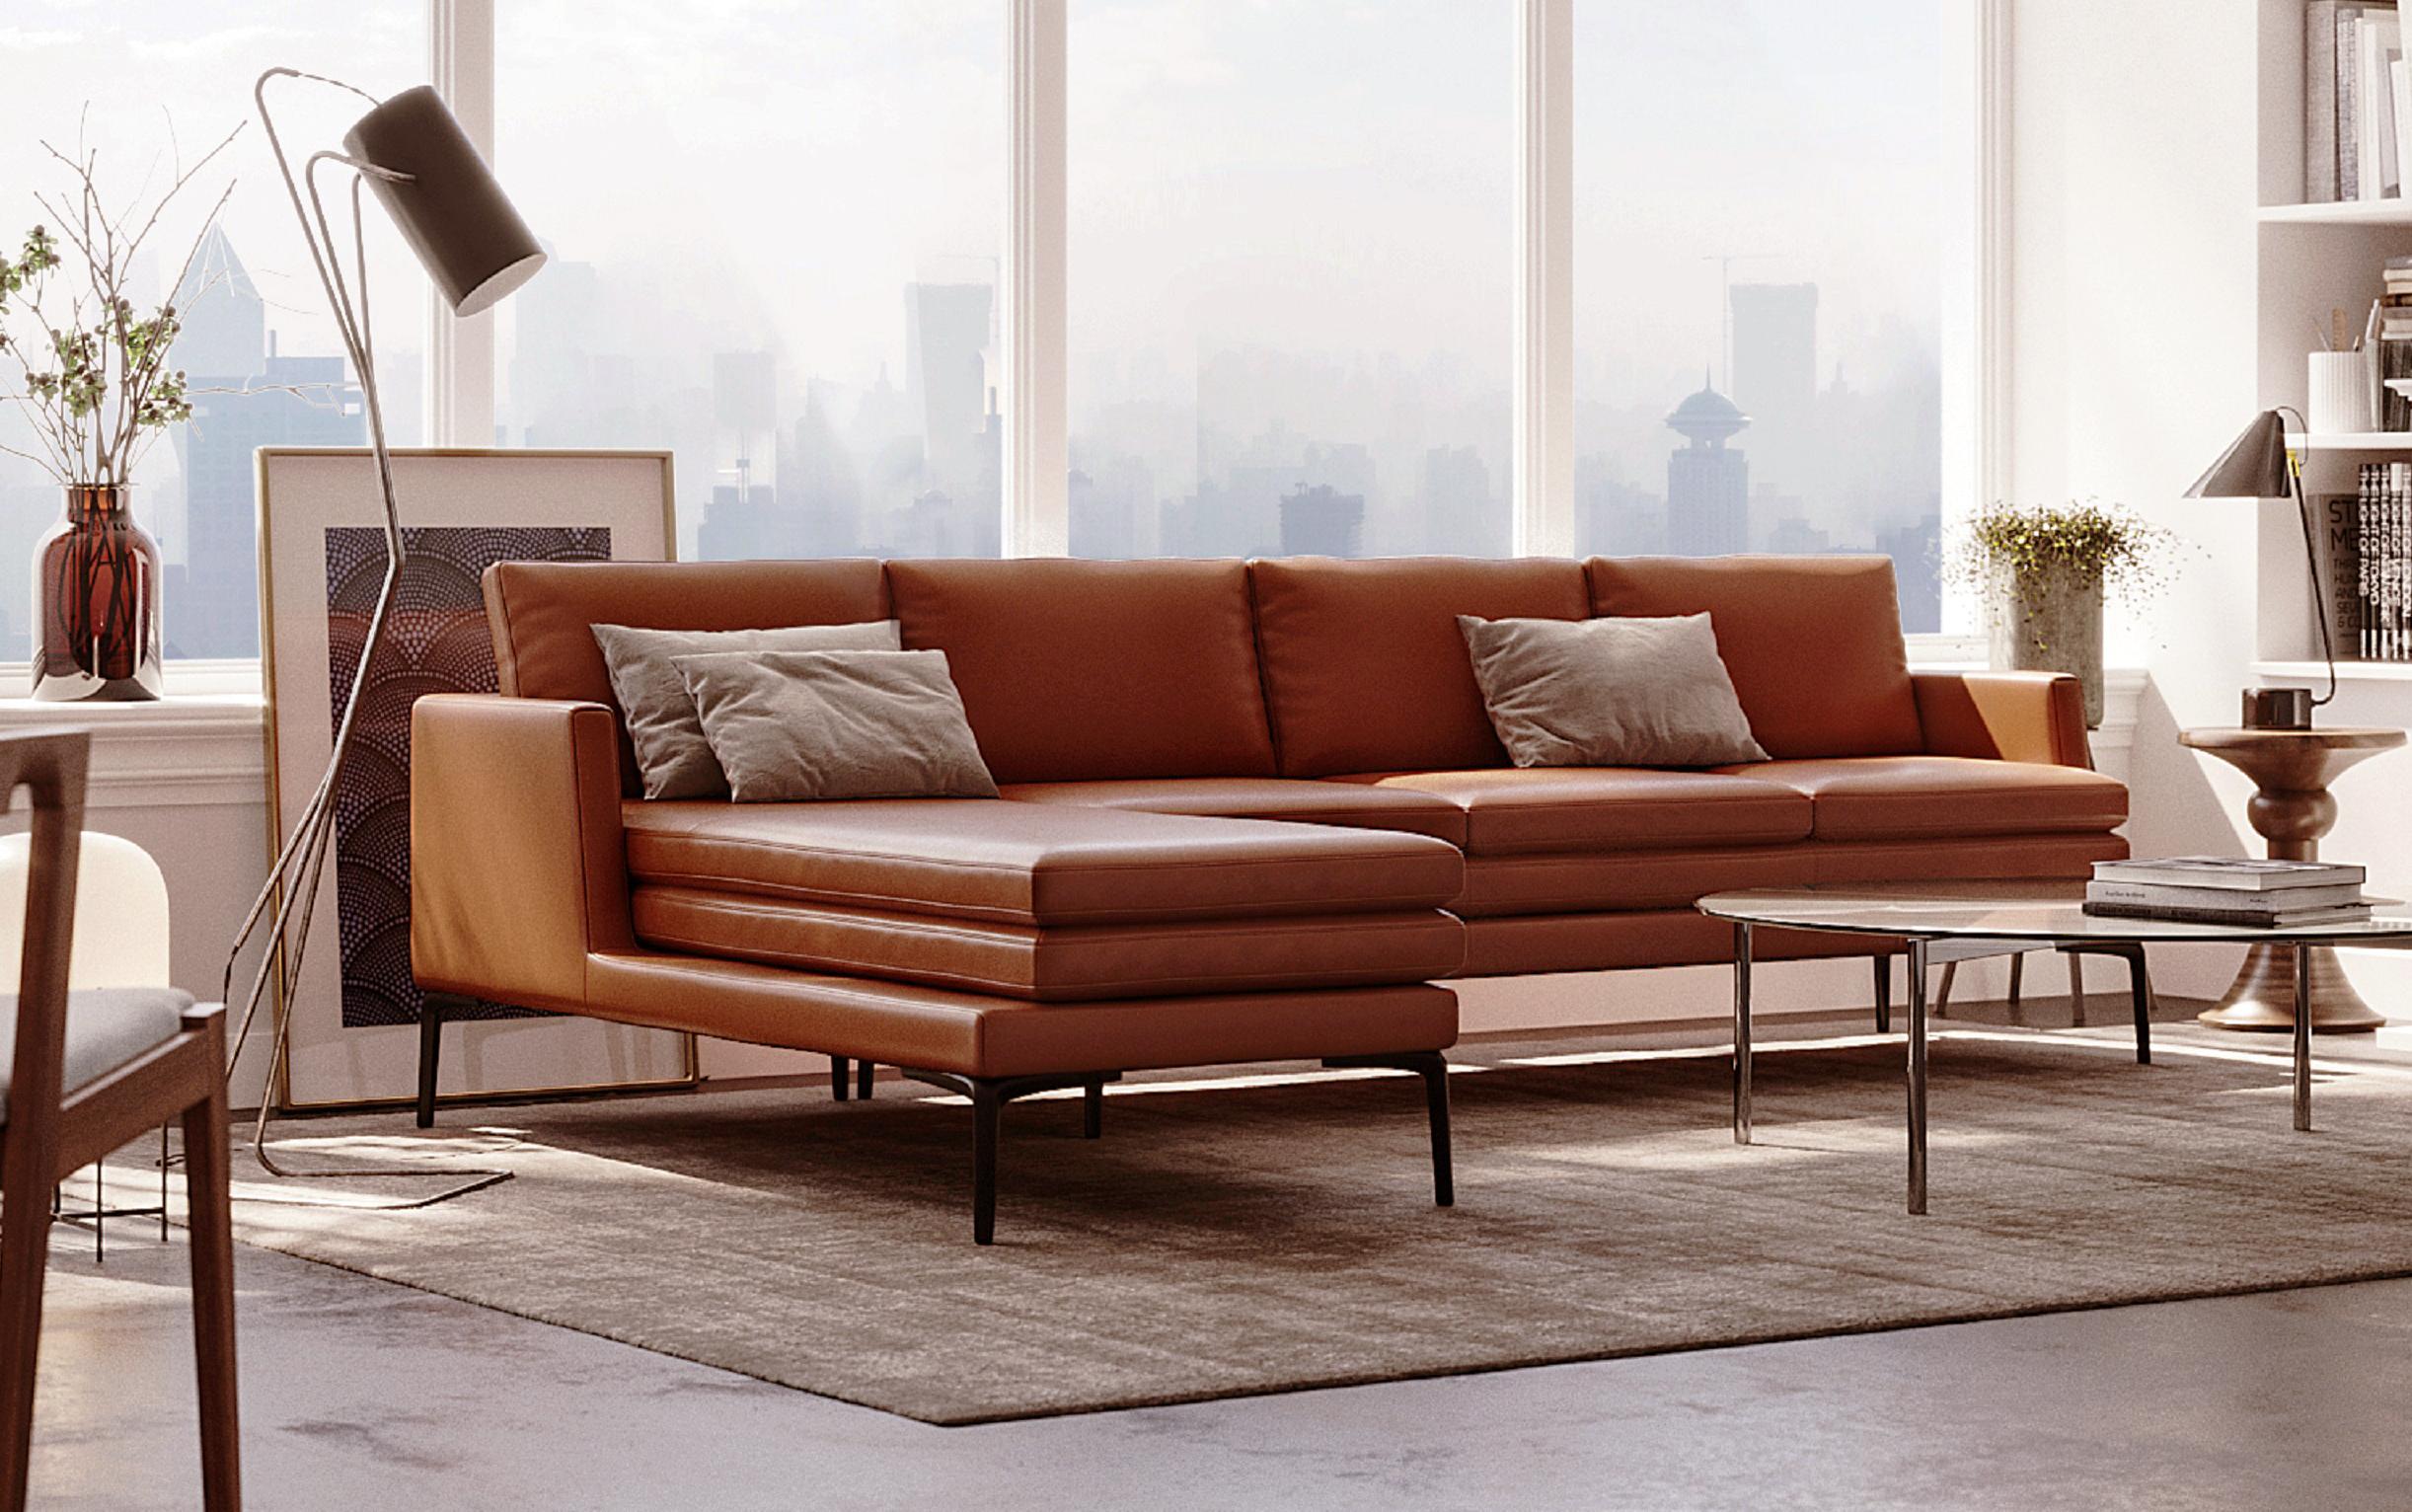 

    
Tan Top Grain Leather Sectional Sofa 439 Rica Moroni Modern Contemporary
